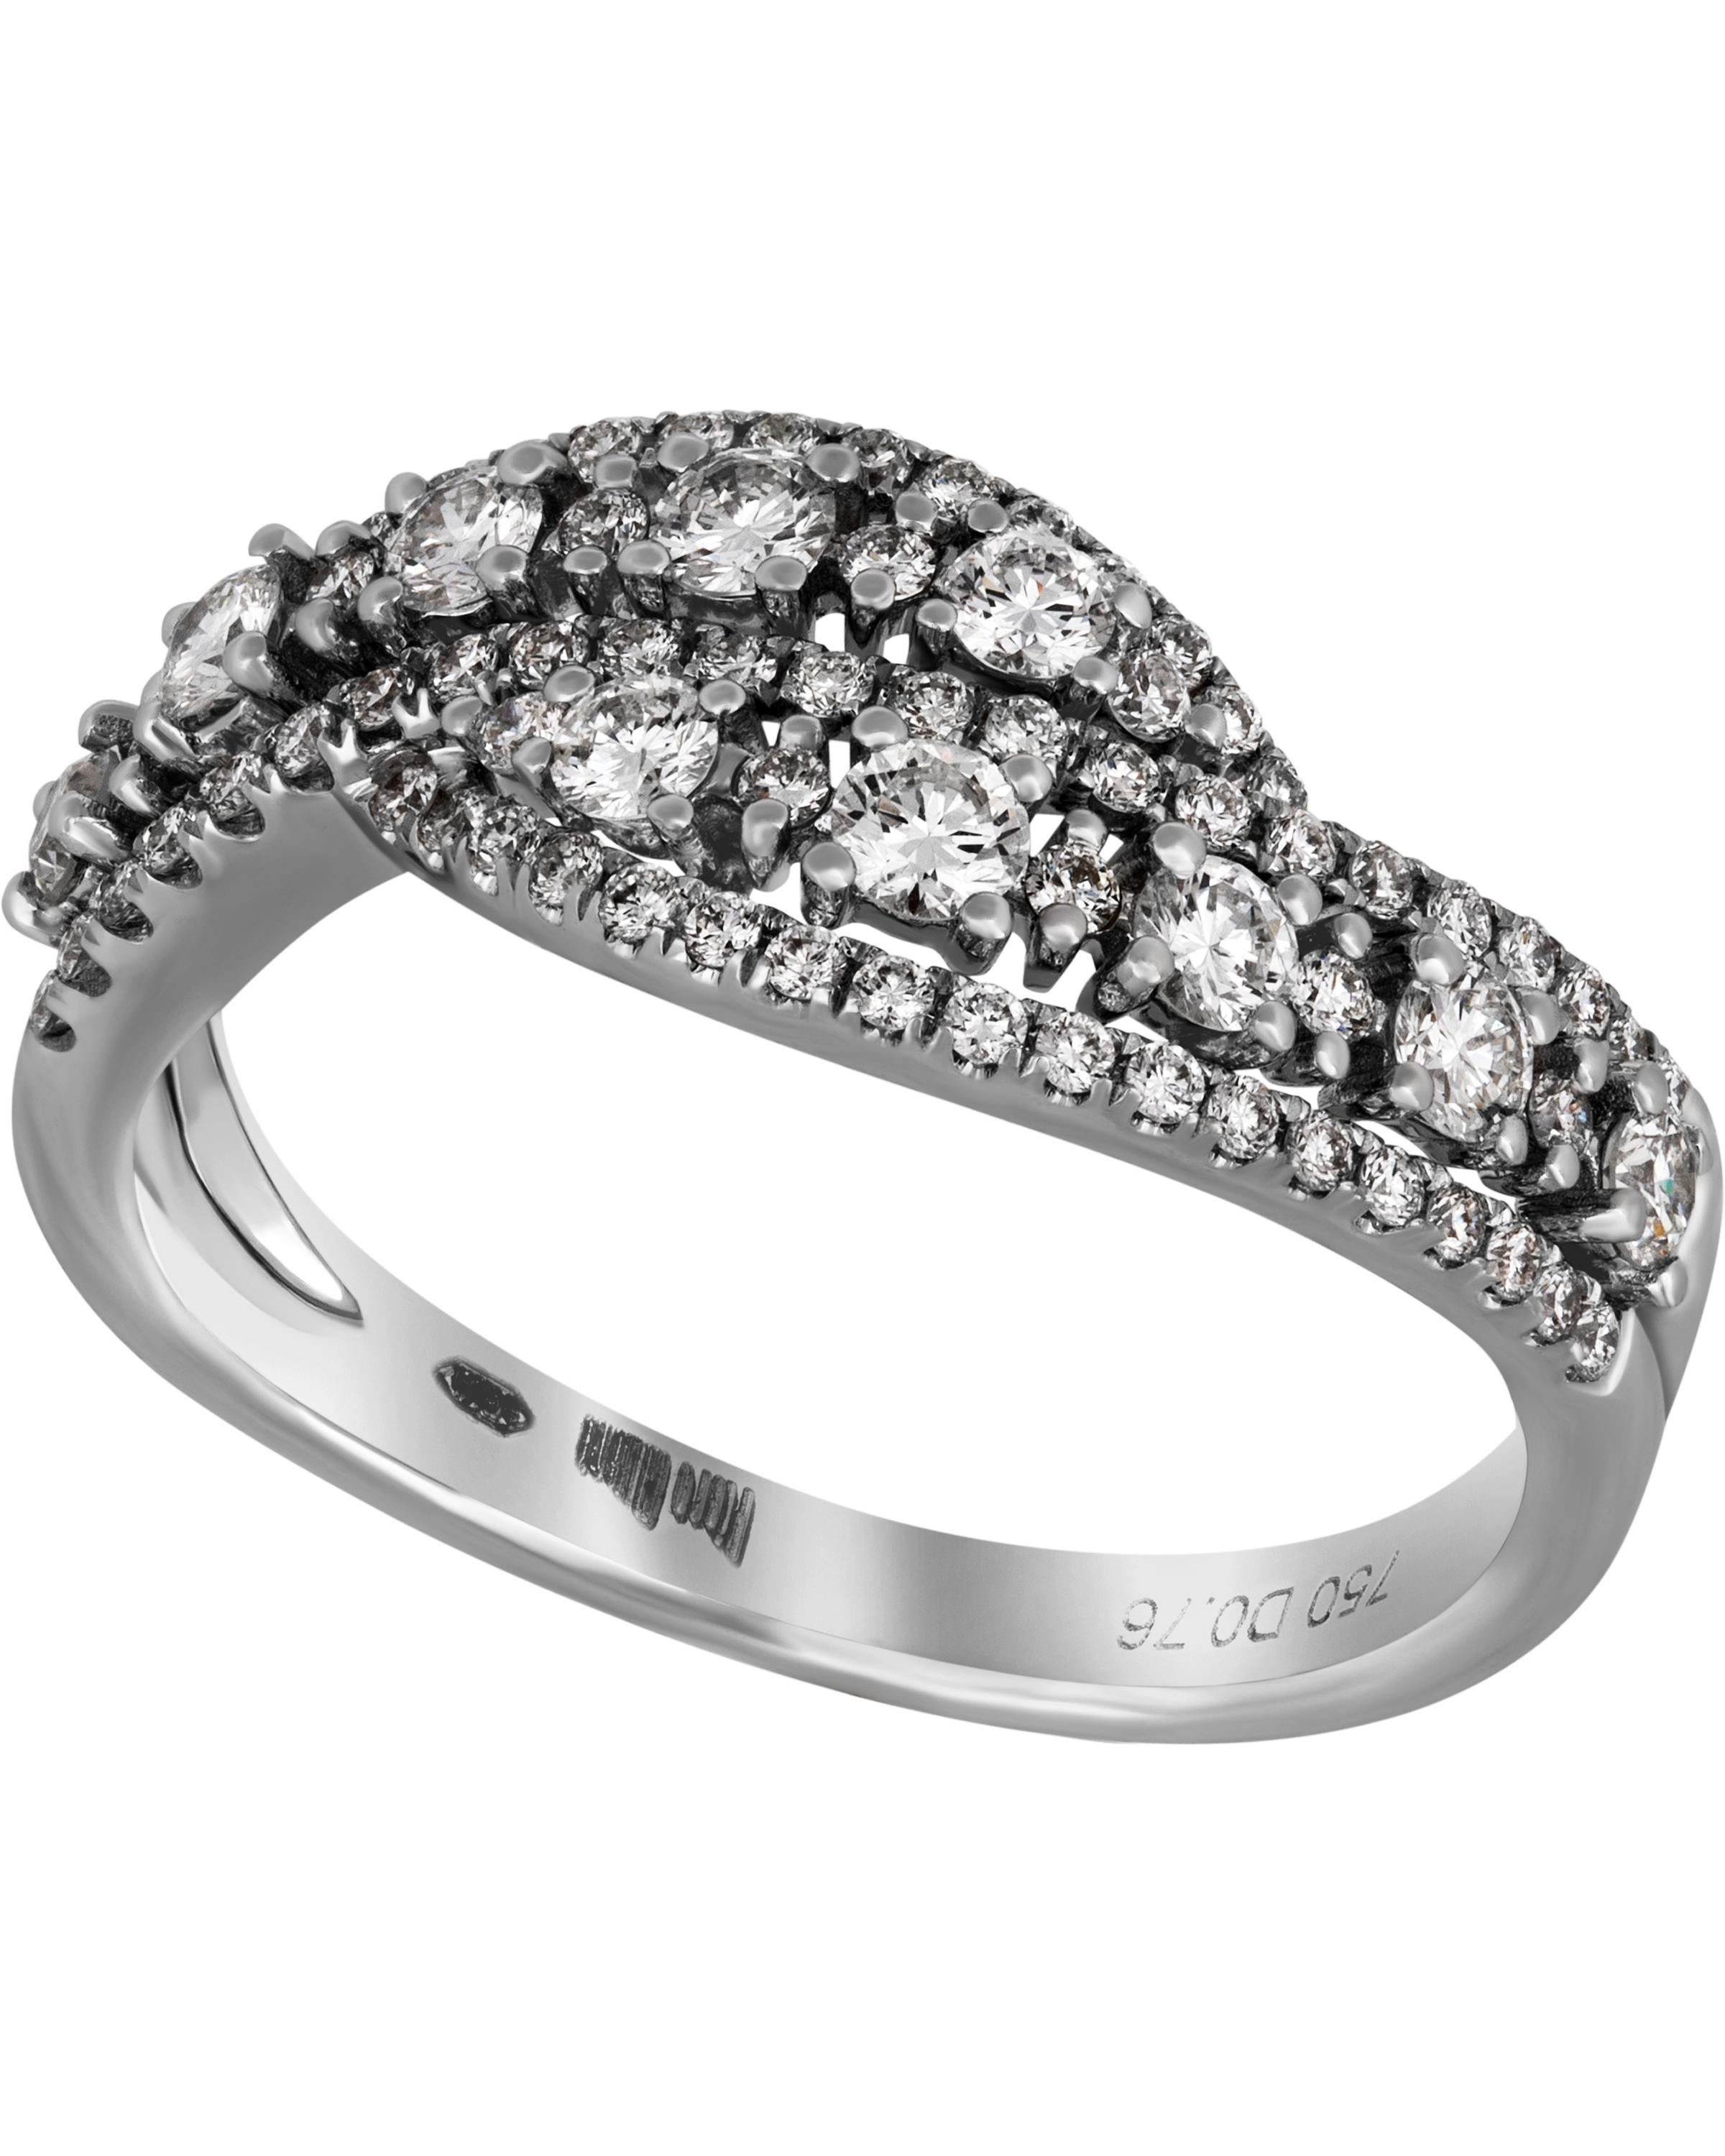 Contemporary Piero Milano 18K White Gold Diamond Ring Sz 7.25 For Sale